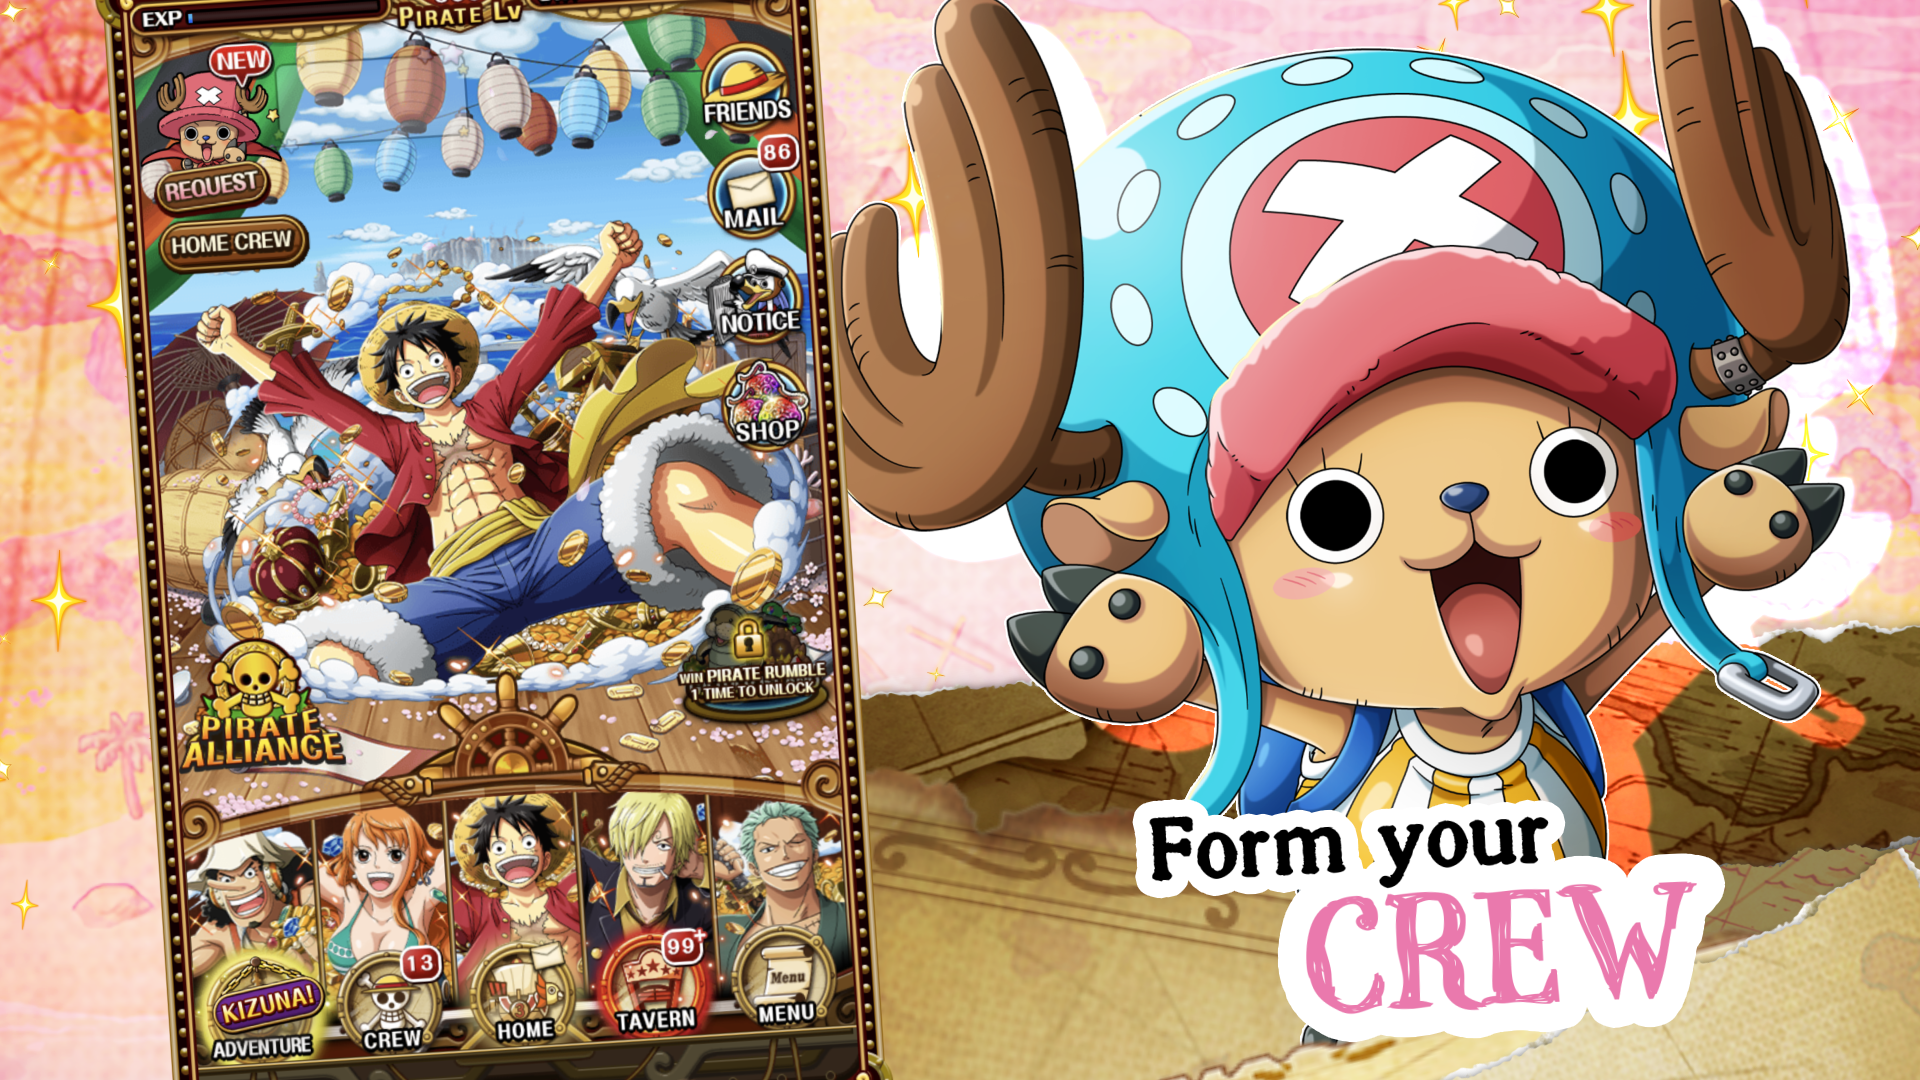 One Piece Road to the Strong versão móvel andróide iOS-TapTap